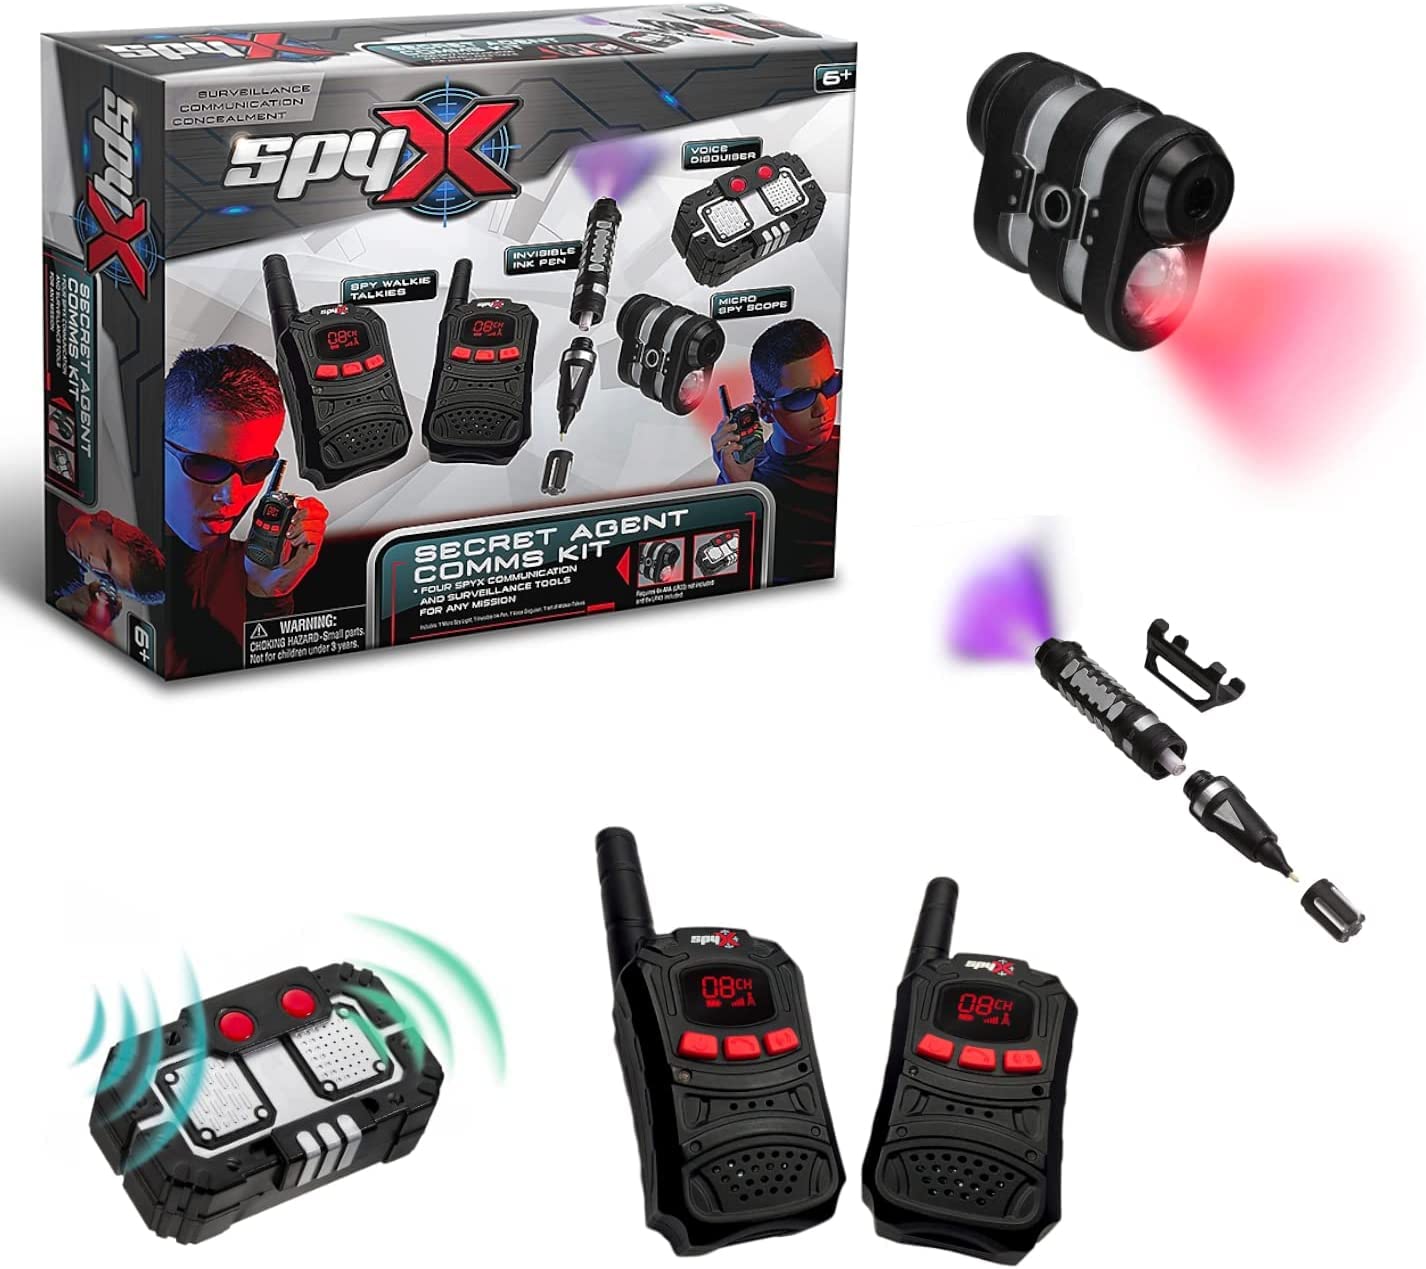 SpyX/Secret Agent Comms Kit - Includes Spy Toy Walkie-Talkie Pair/Micro Spy Scope/Invisible Ink Pen/Secret Voice Disguiser. 4 Communication & Surveillance Tools for Spy Kids